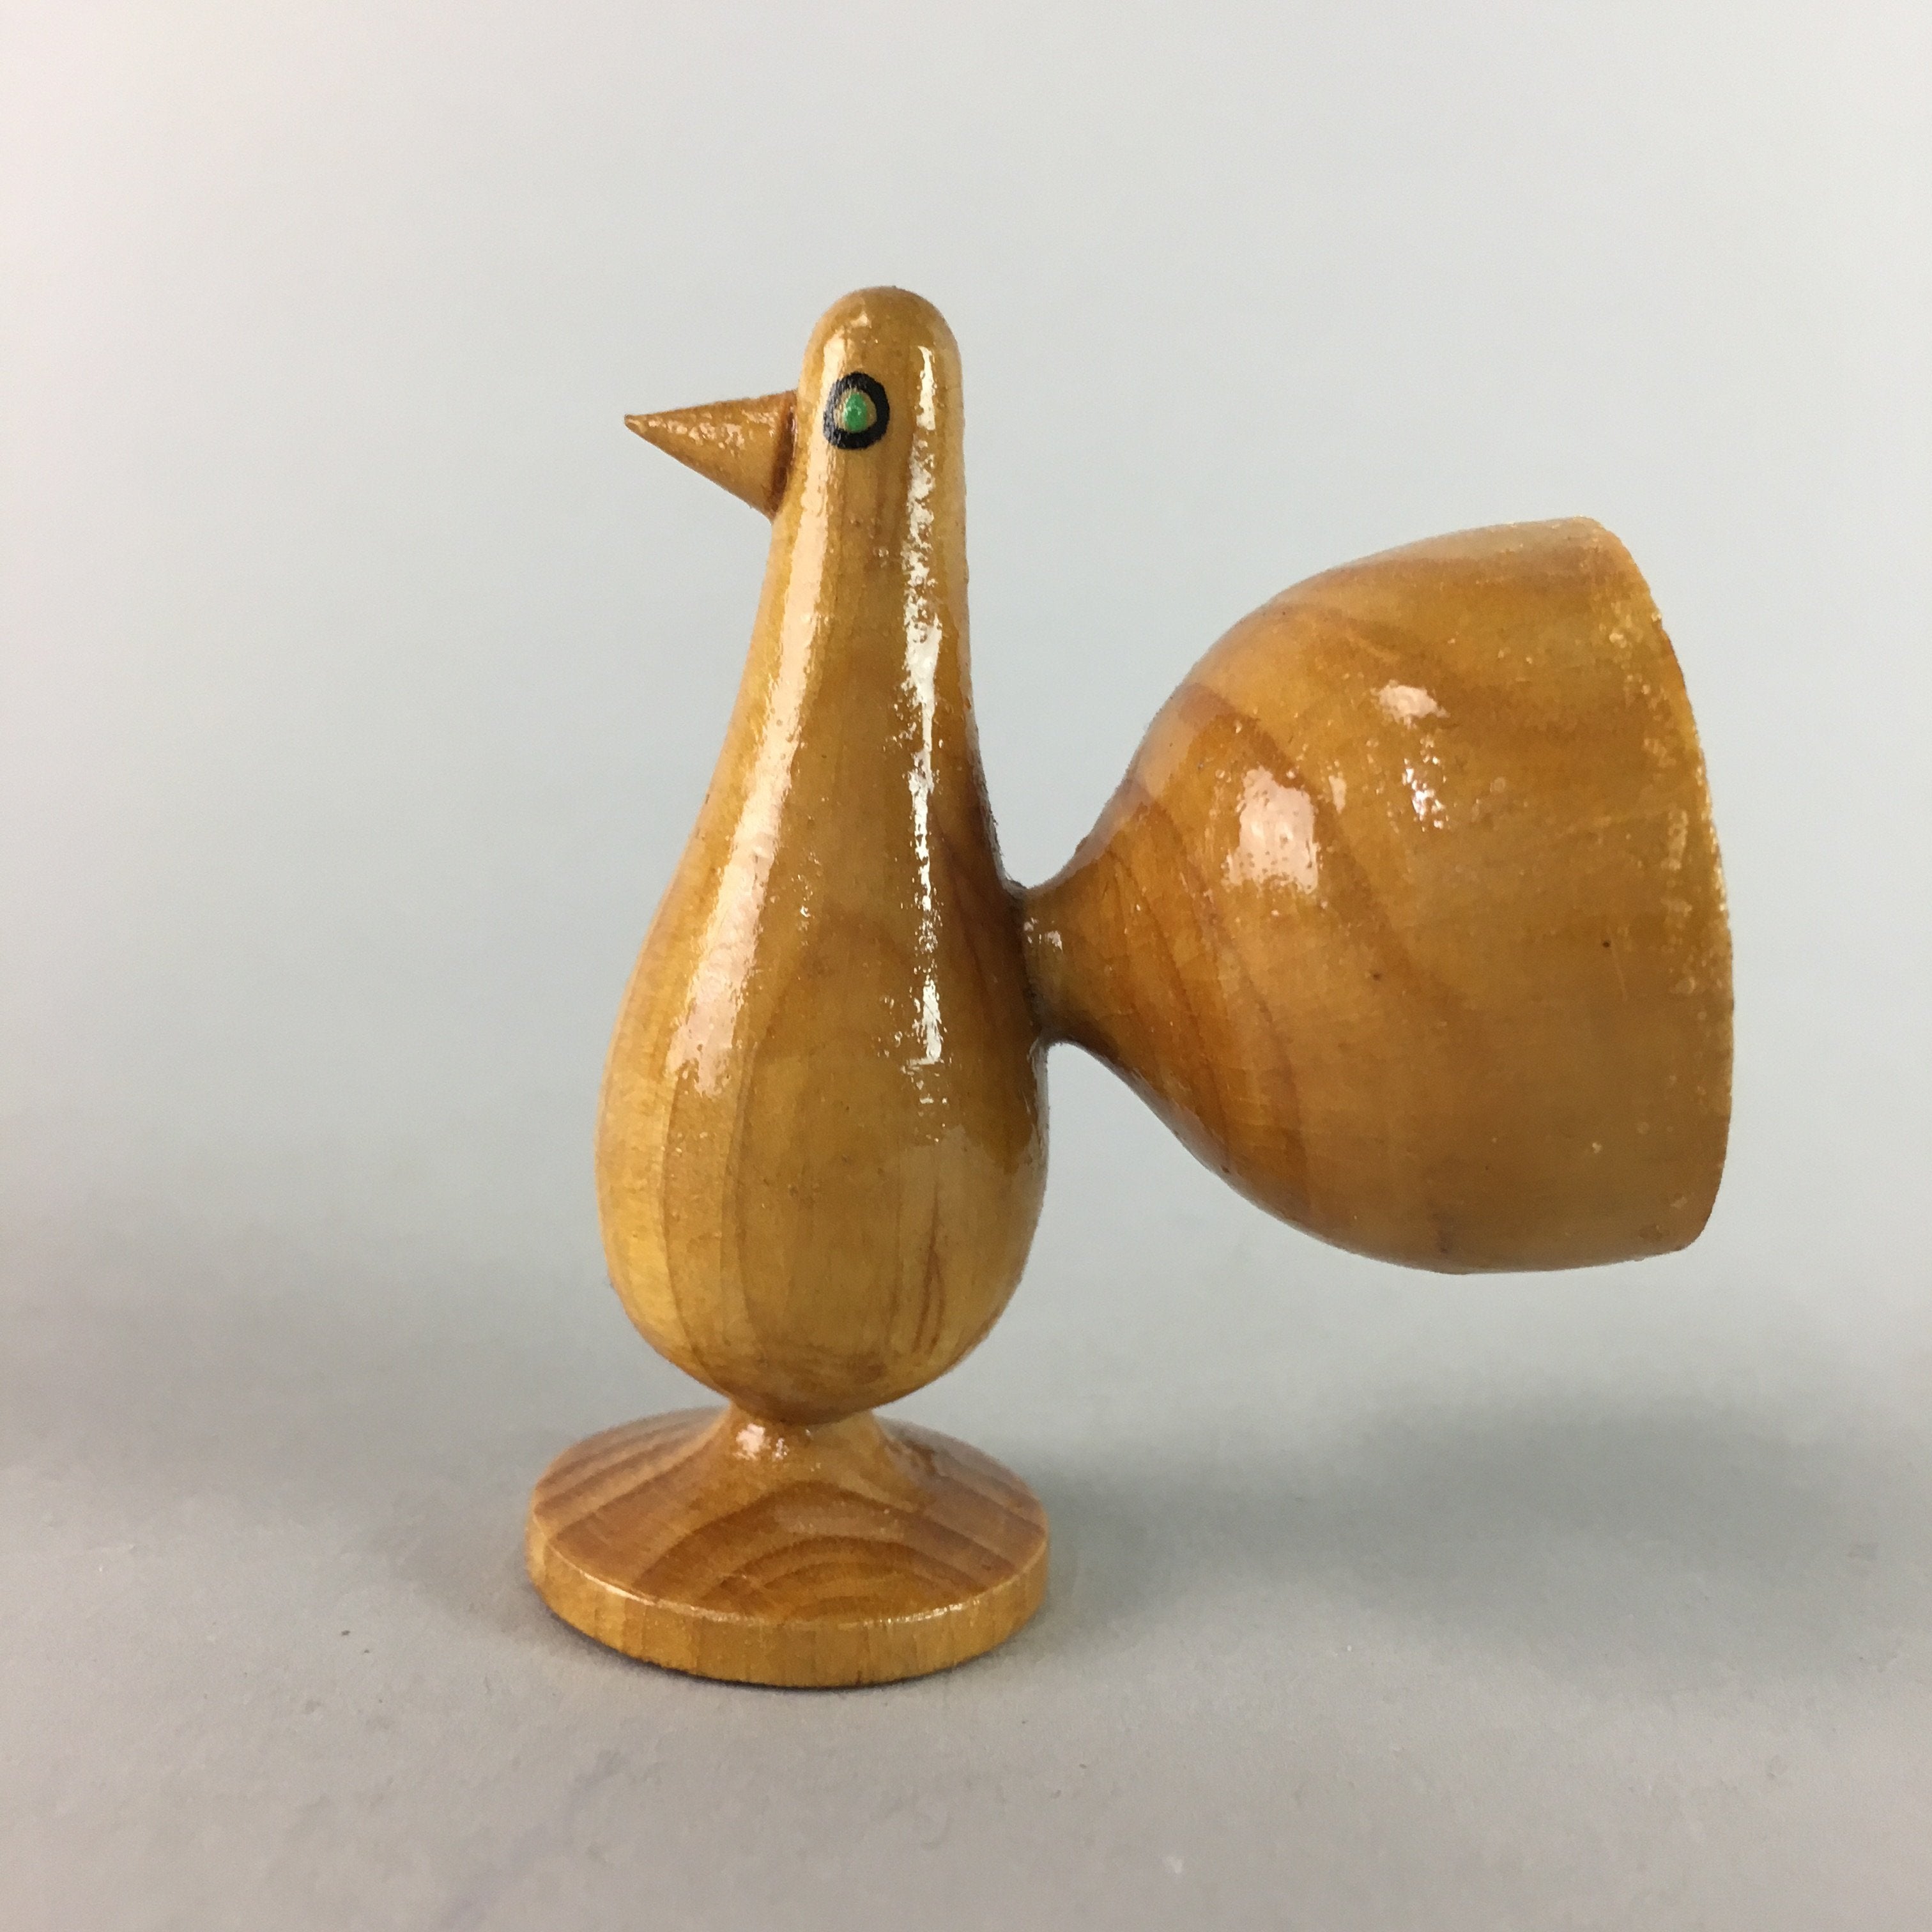 Japanese Kokeshi Doll Bird Ornament Vtg Wooden Figurine Handcraft Ningyo KF72